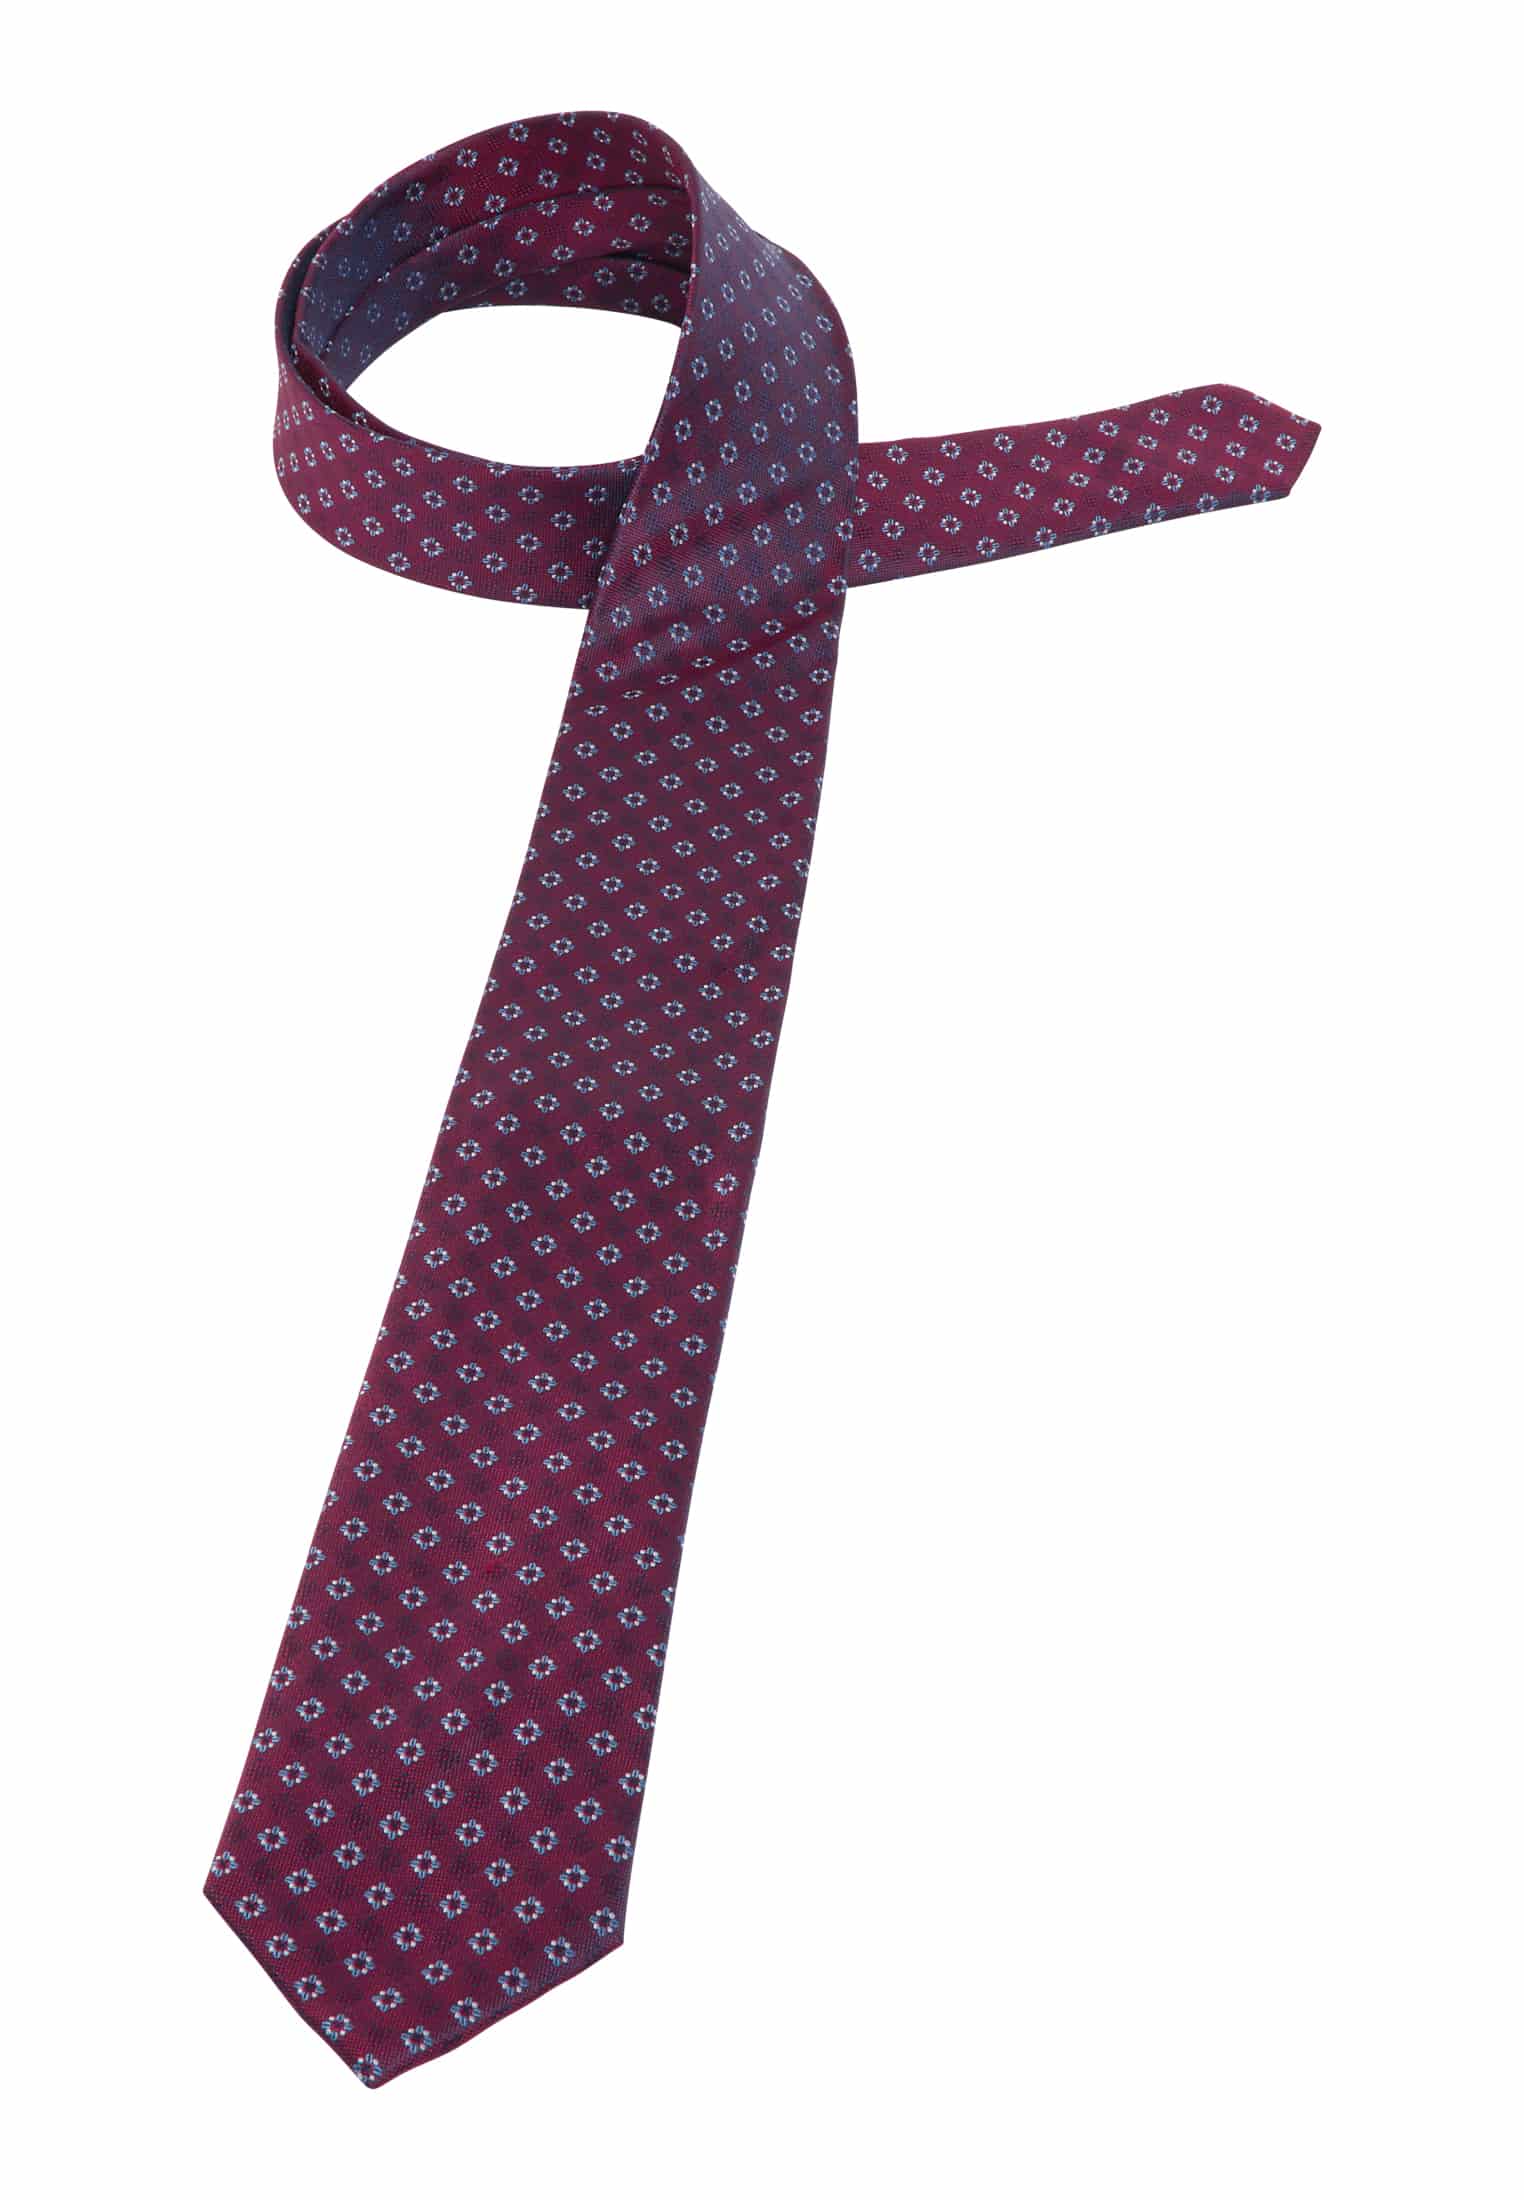 Krawatte in berry gemustert | berry | 142 | 1AC01899-05-72-142